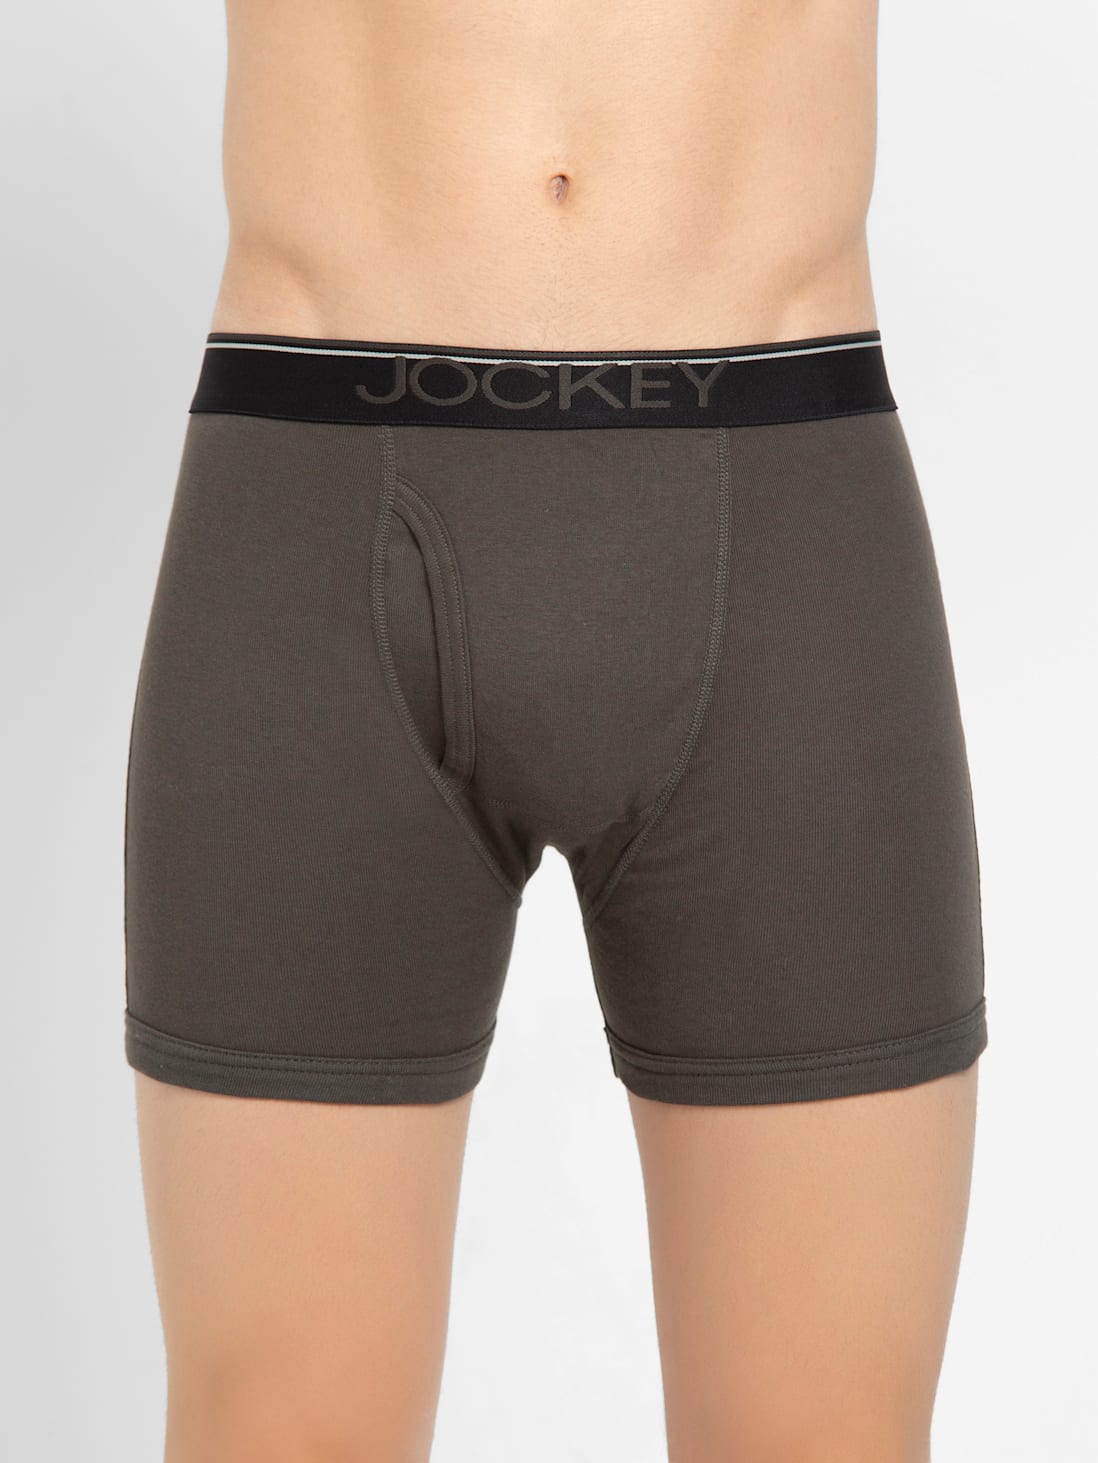 Jockey, Underwear & Socks, Jockey Boxer Briefs